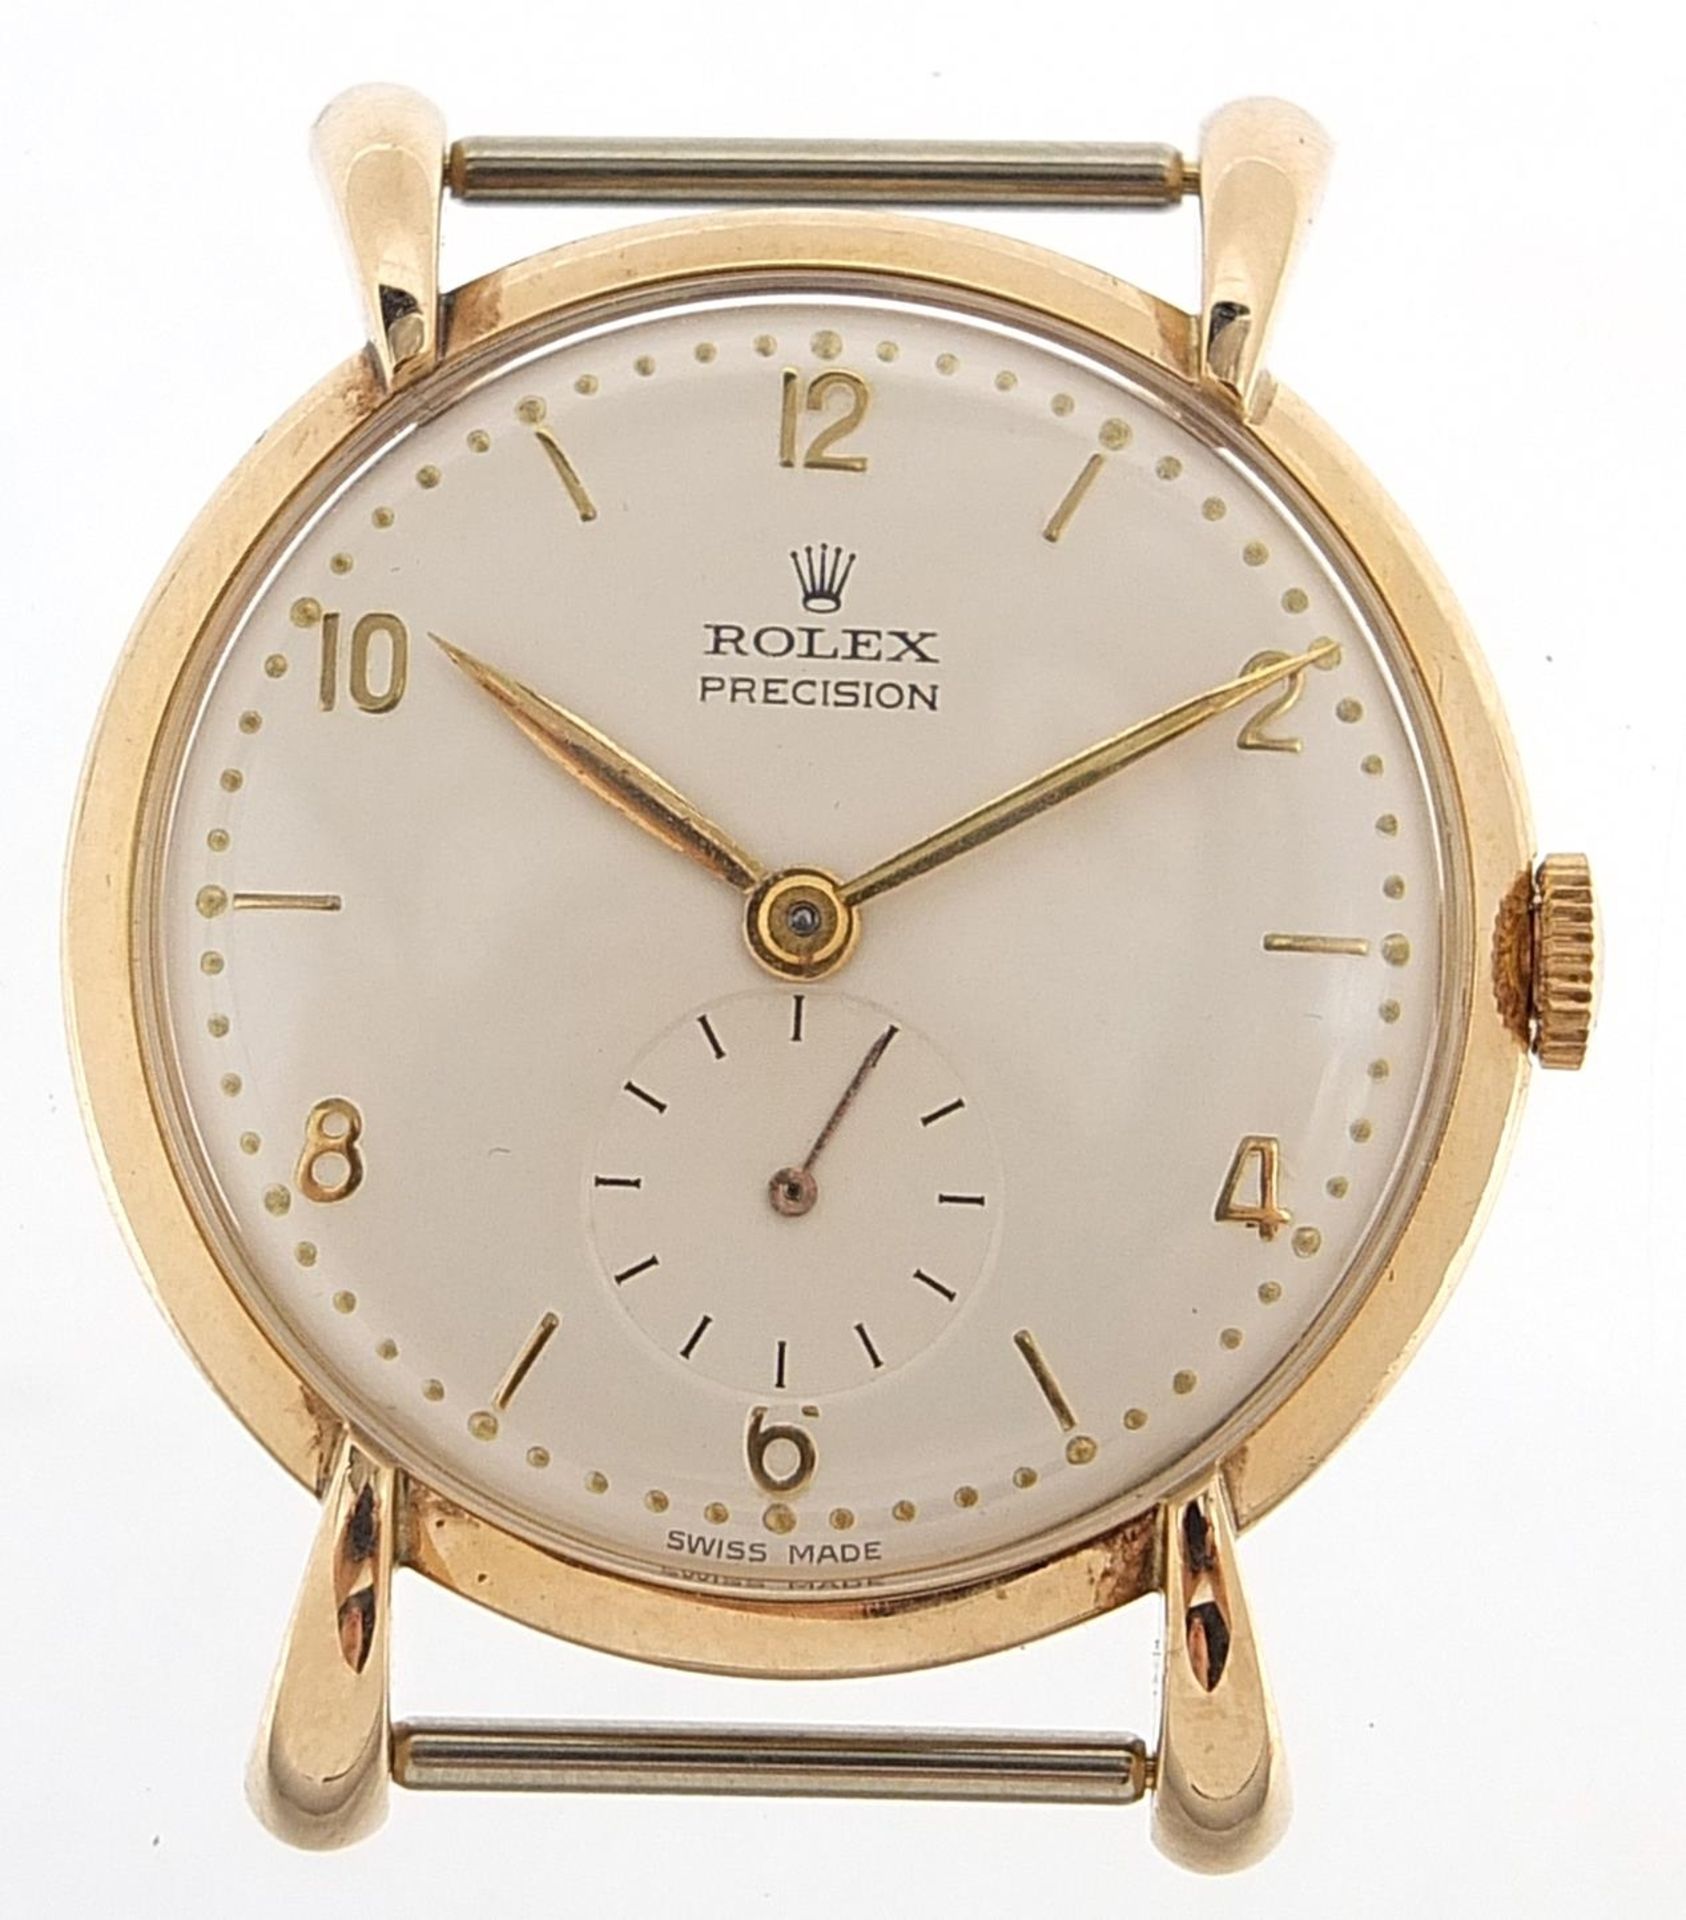 Rolex, gentlemen's Rolex Precision wristwatch, 35mm in diameter